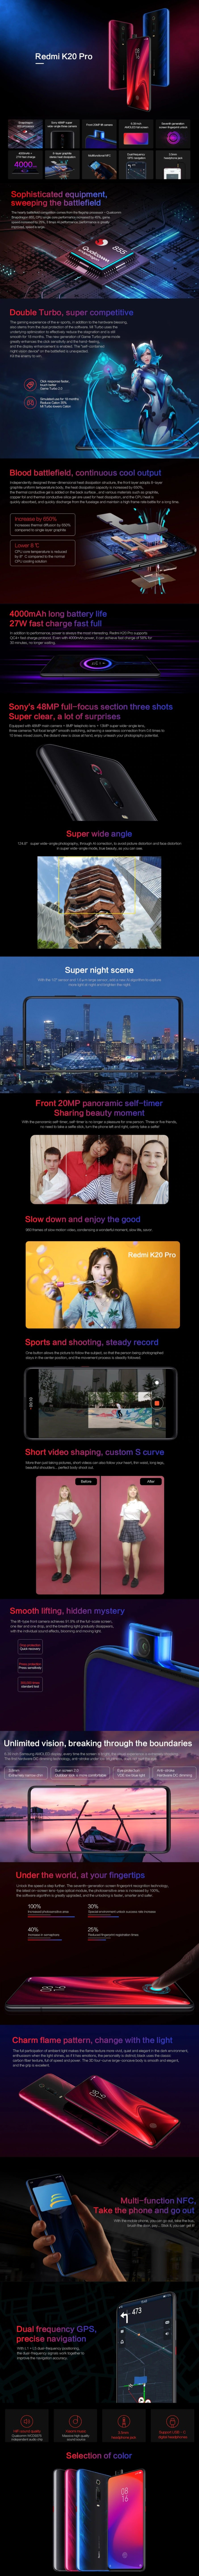 Black Friday Sale - Xiaomi Redmi K20 Pro 4G Phablet